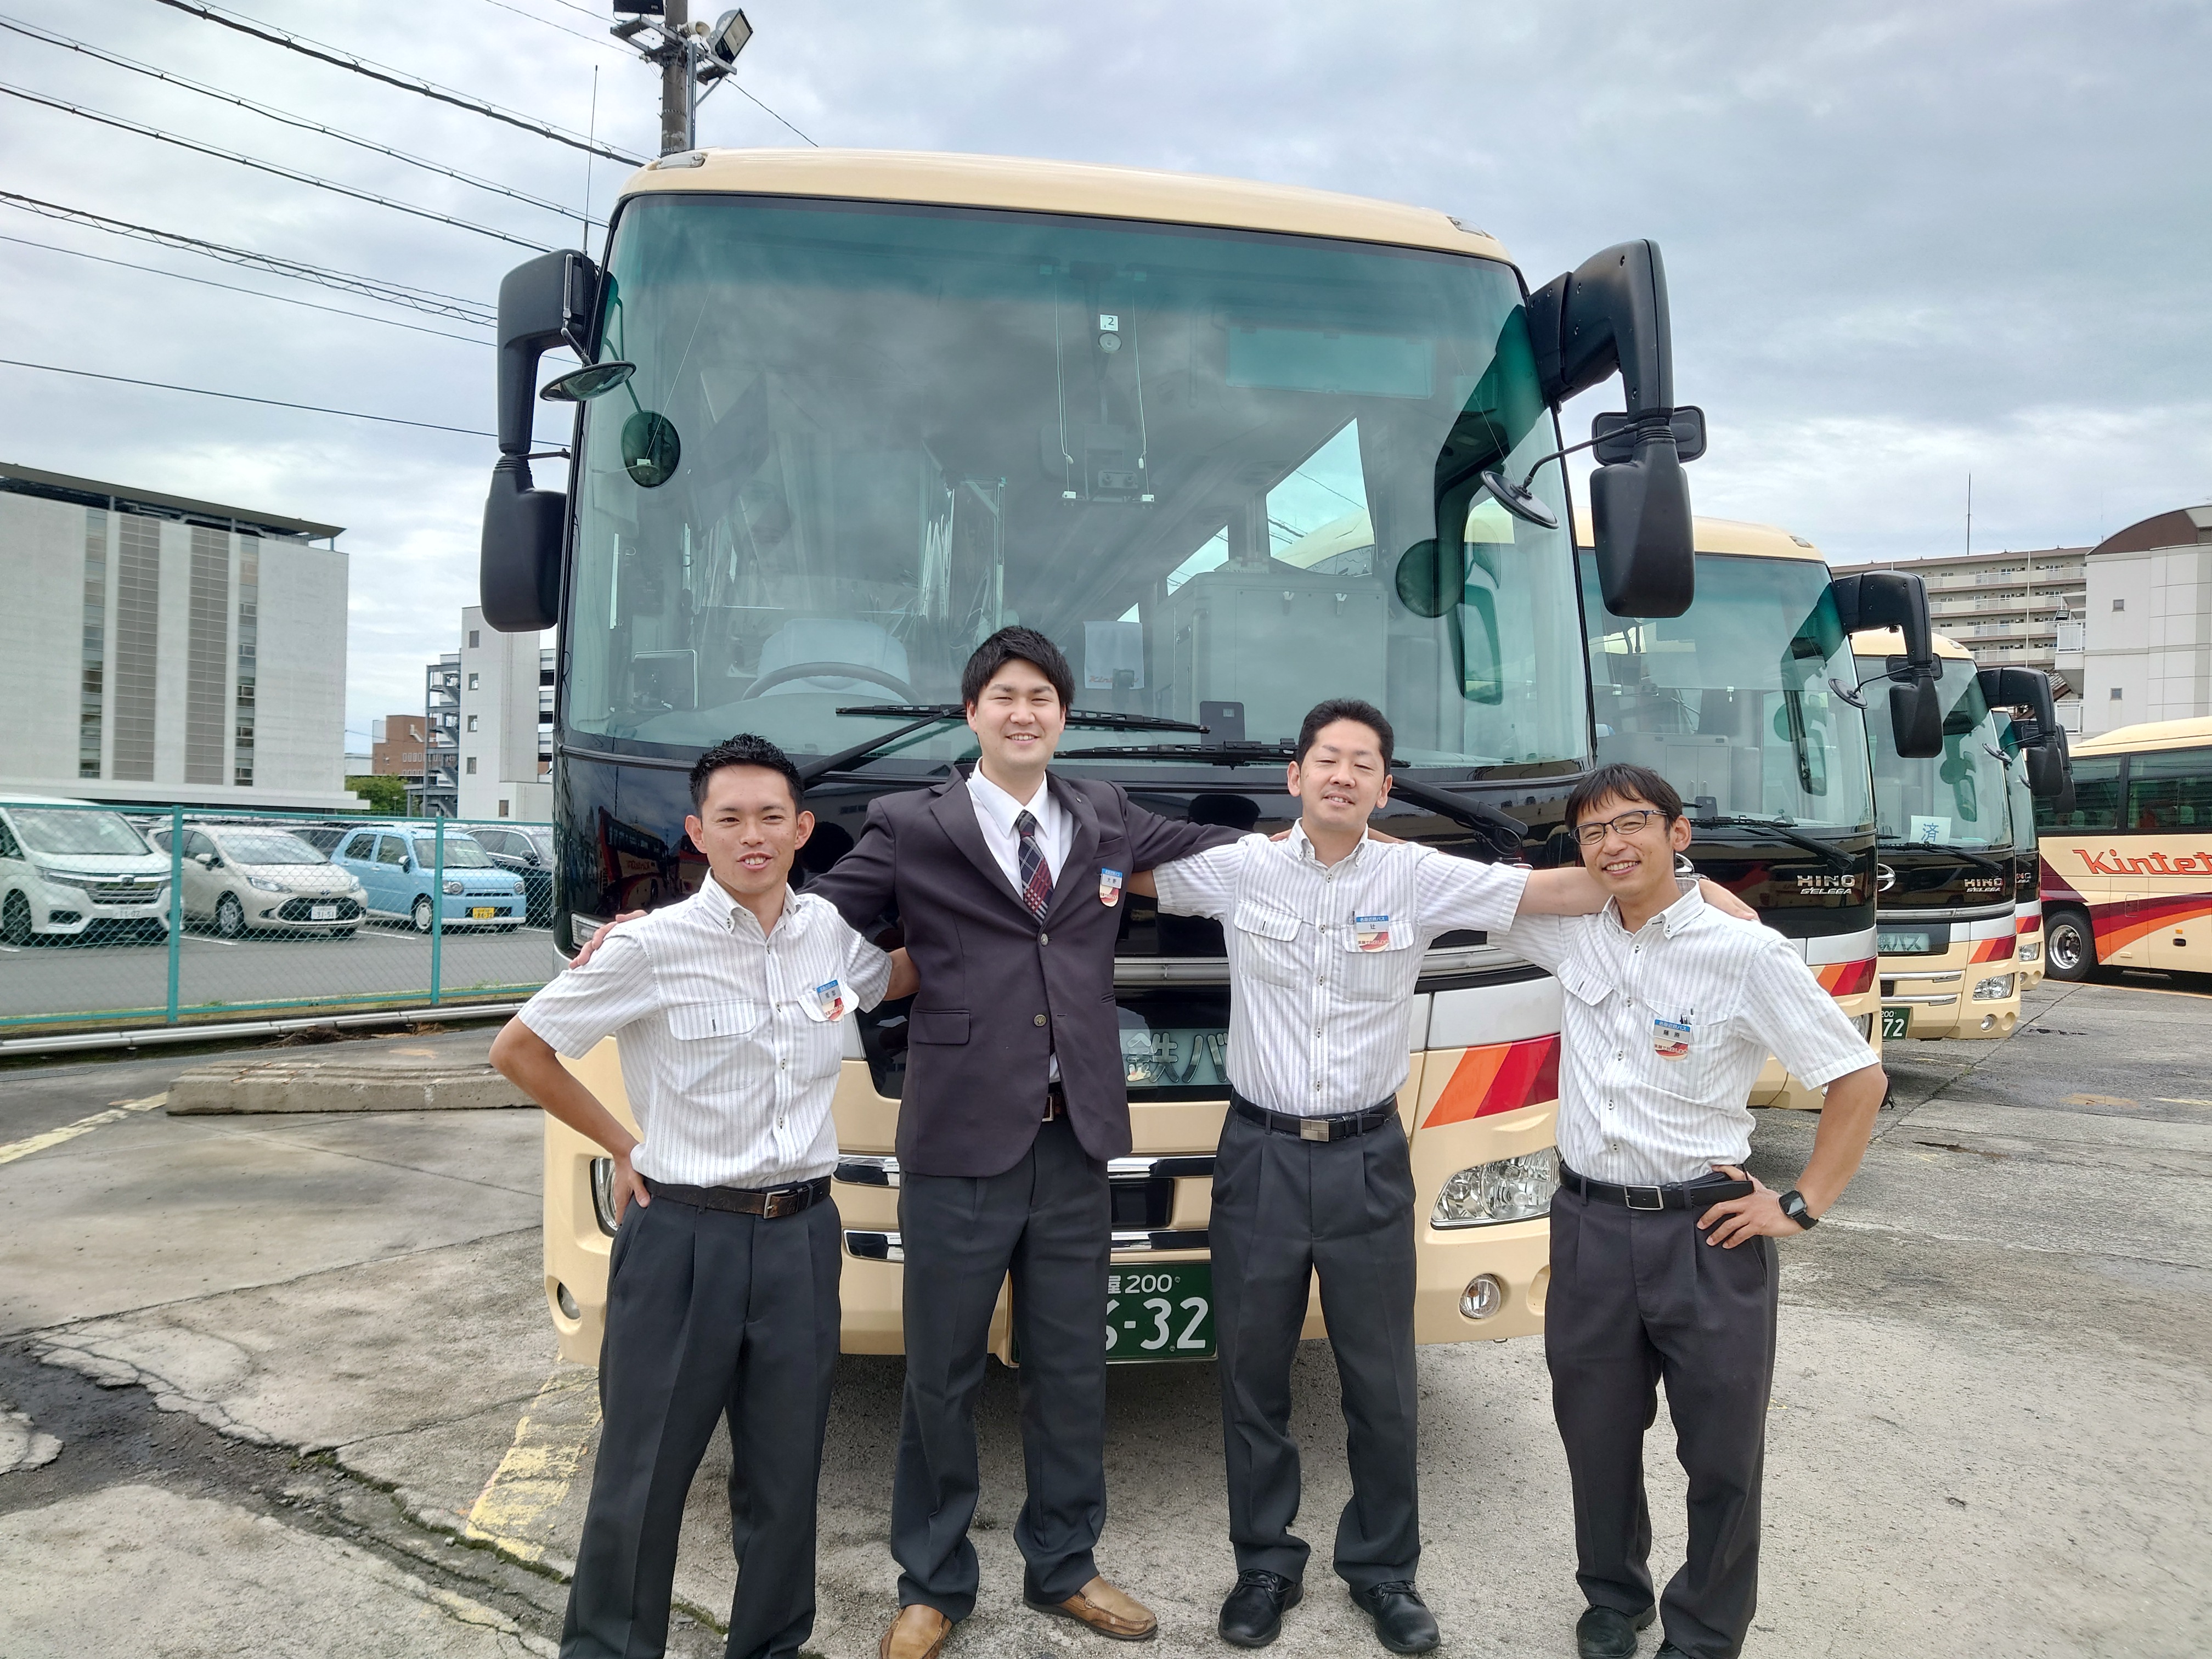 名阪近鉄バス株式会社/観光バス運転手